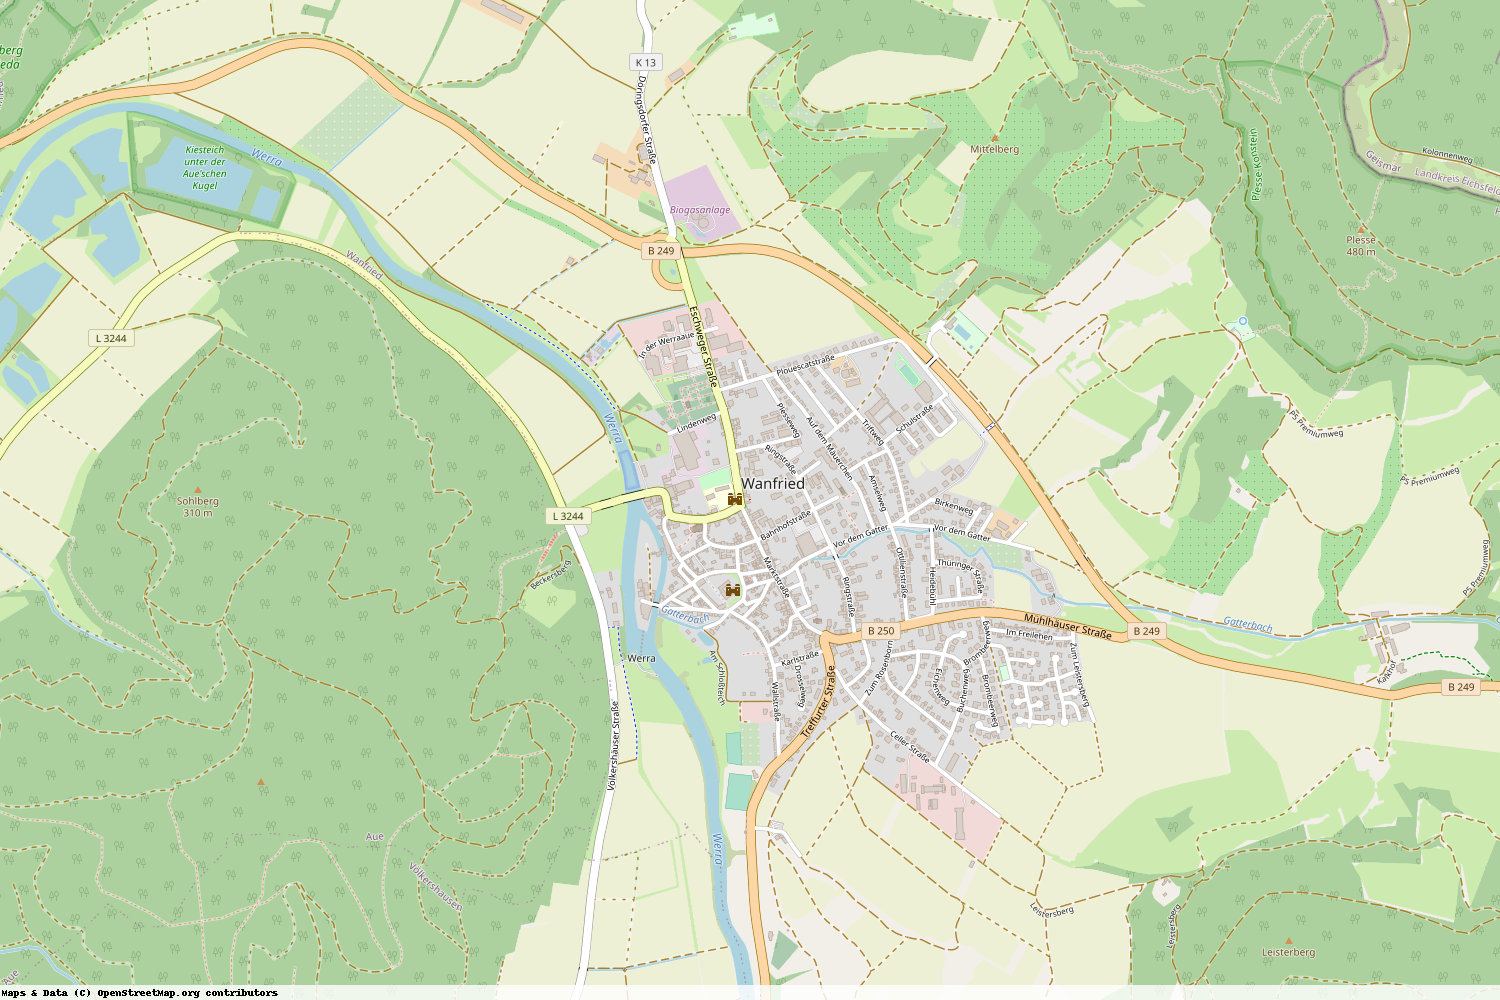 Ist gerade Stromausfall in Hessen - Werra-Meißner-Kreis - Wanfried?